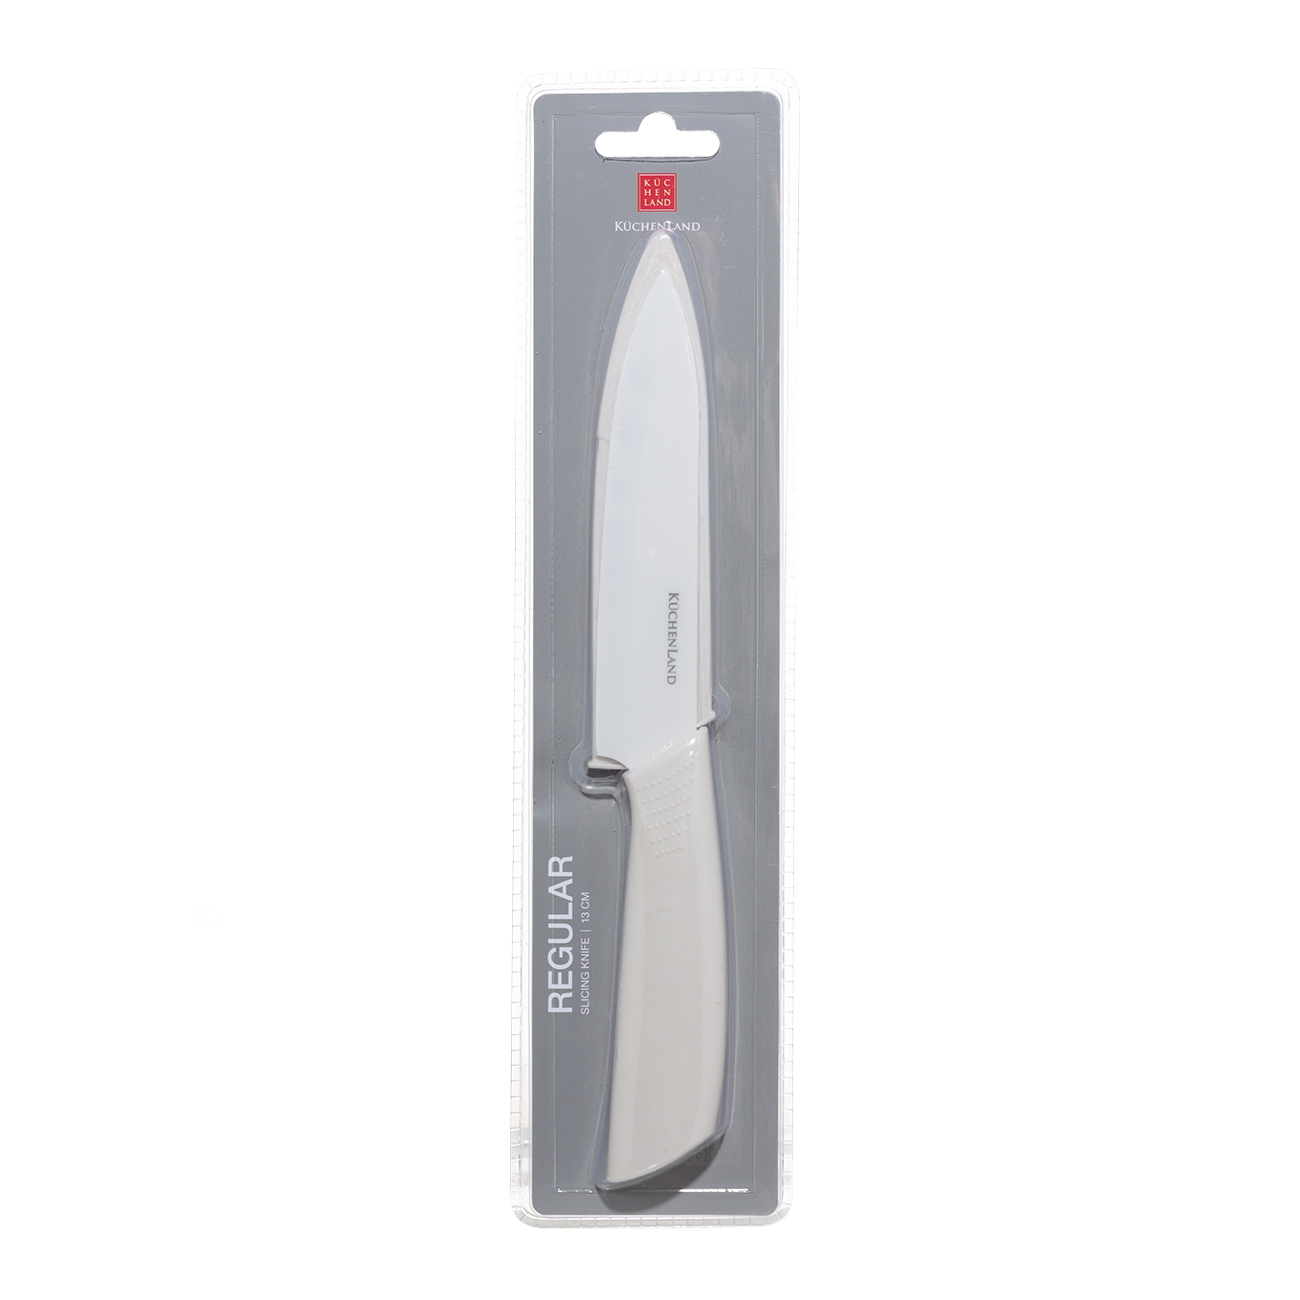 Нож для нарезки, 13 см, с чехлом, керамика/пластик, молочный, Regular